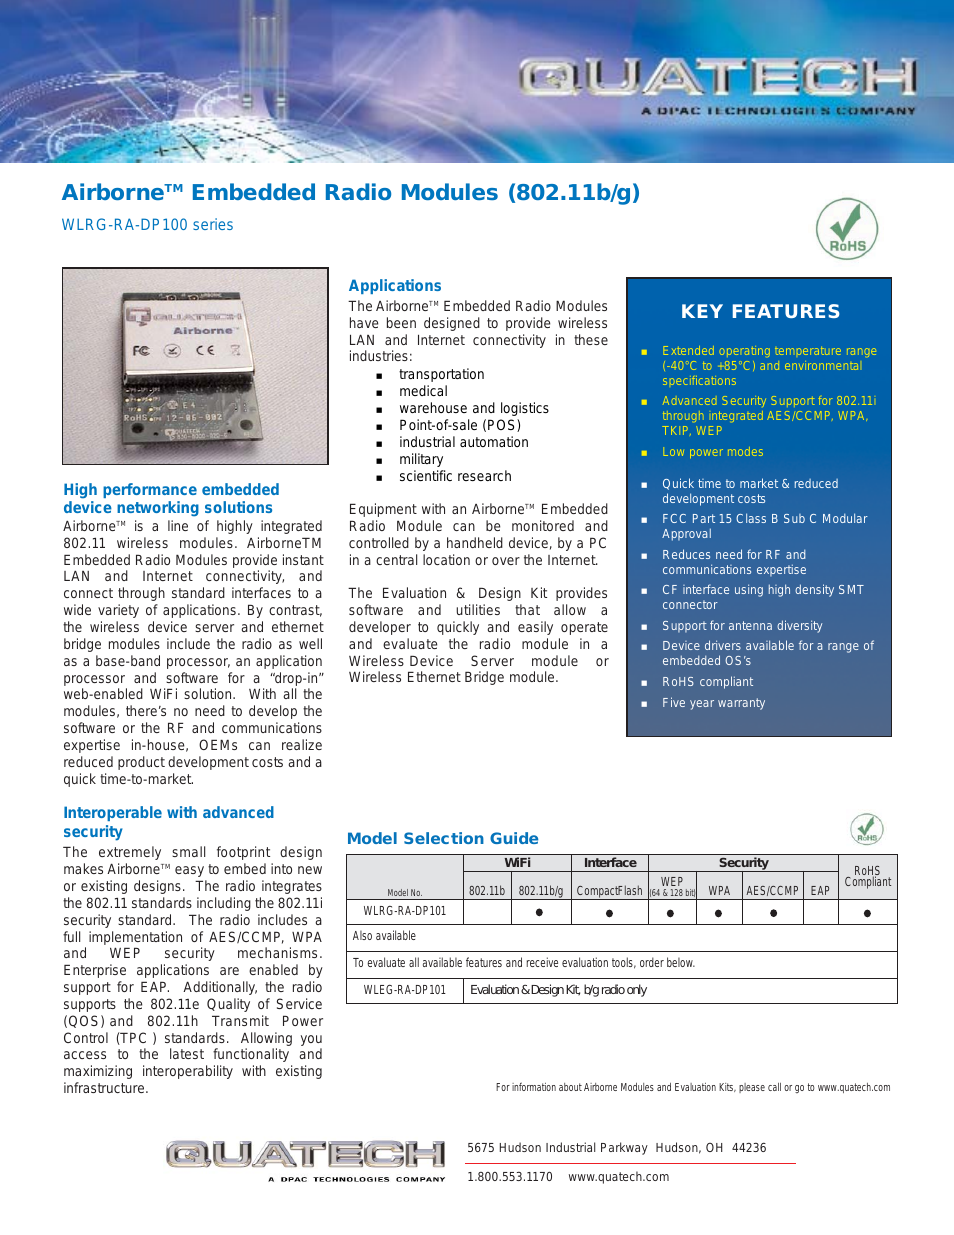 Airborne Embedded Radio Modules WLRB-RA-DP100